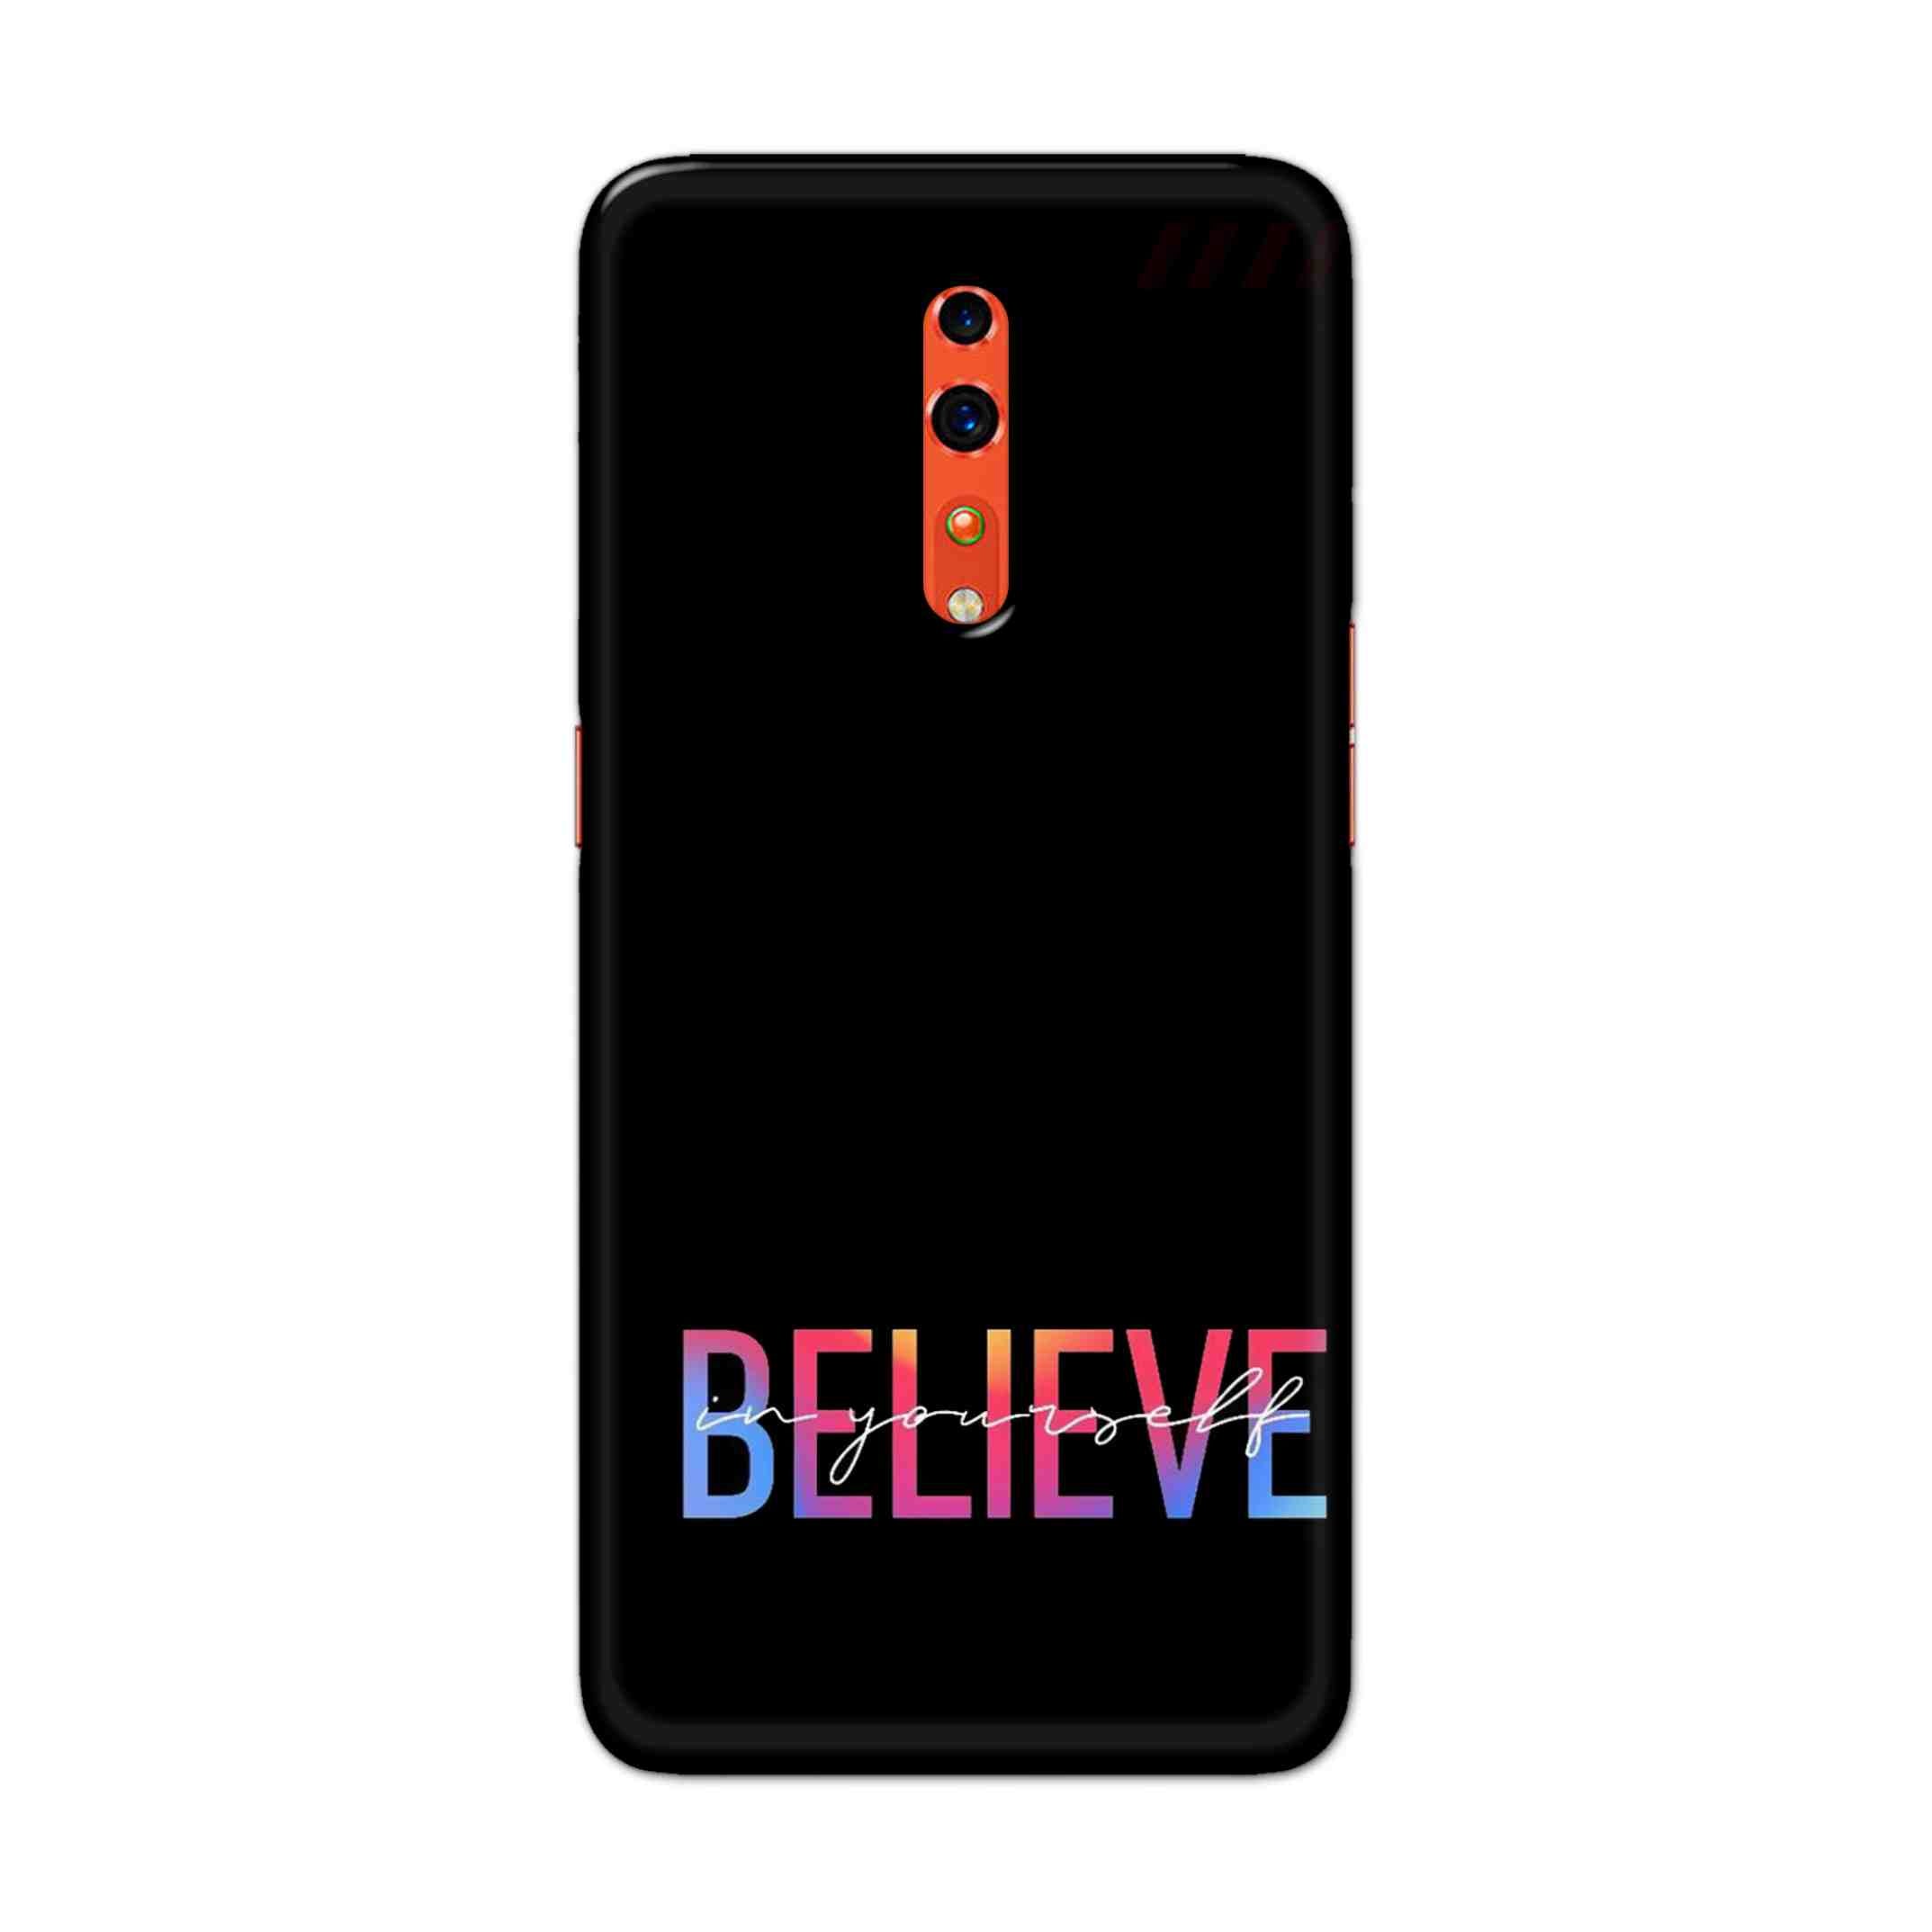 Buy Believe Hard Back Mobile Phone Case Cover For OPPO Reno Z Online